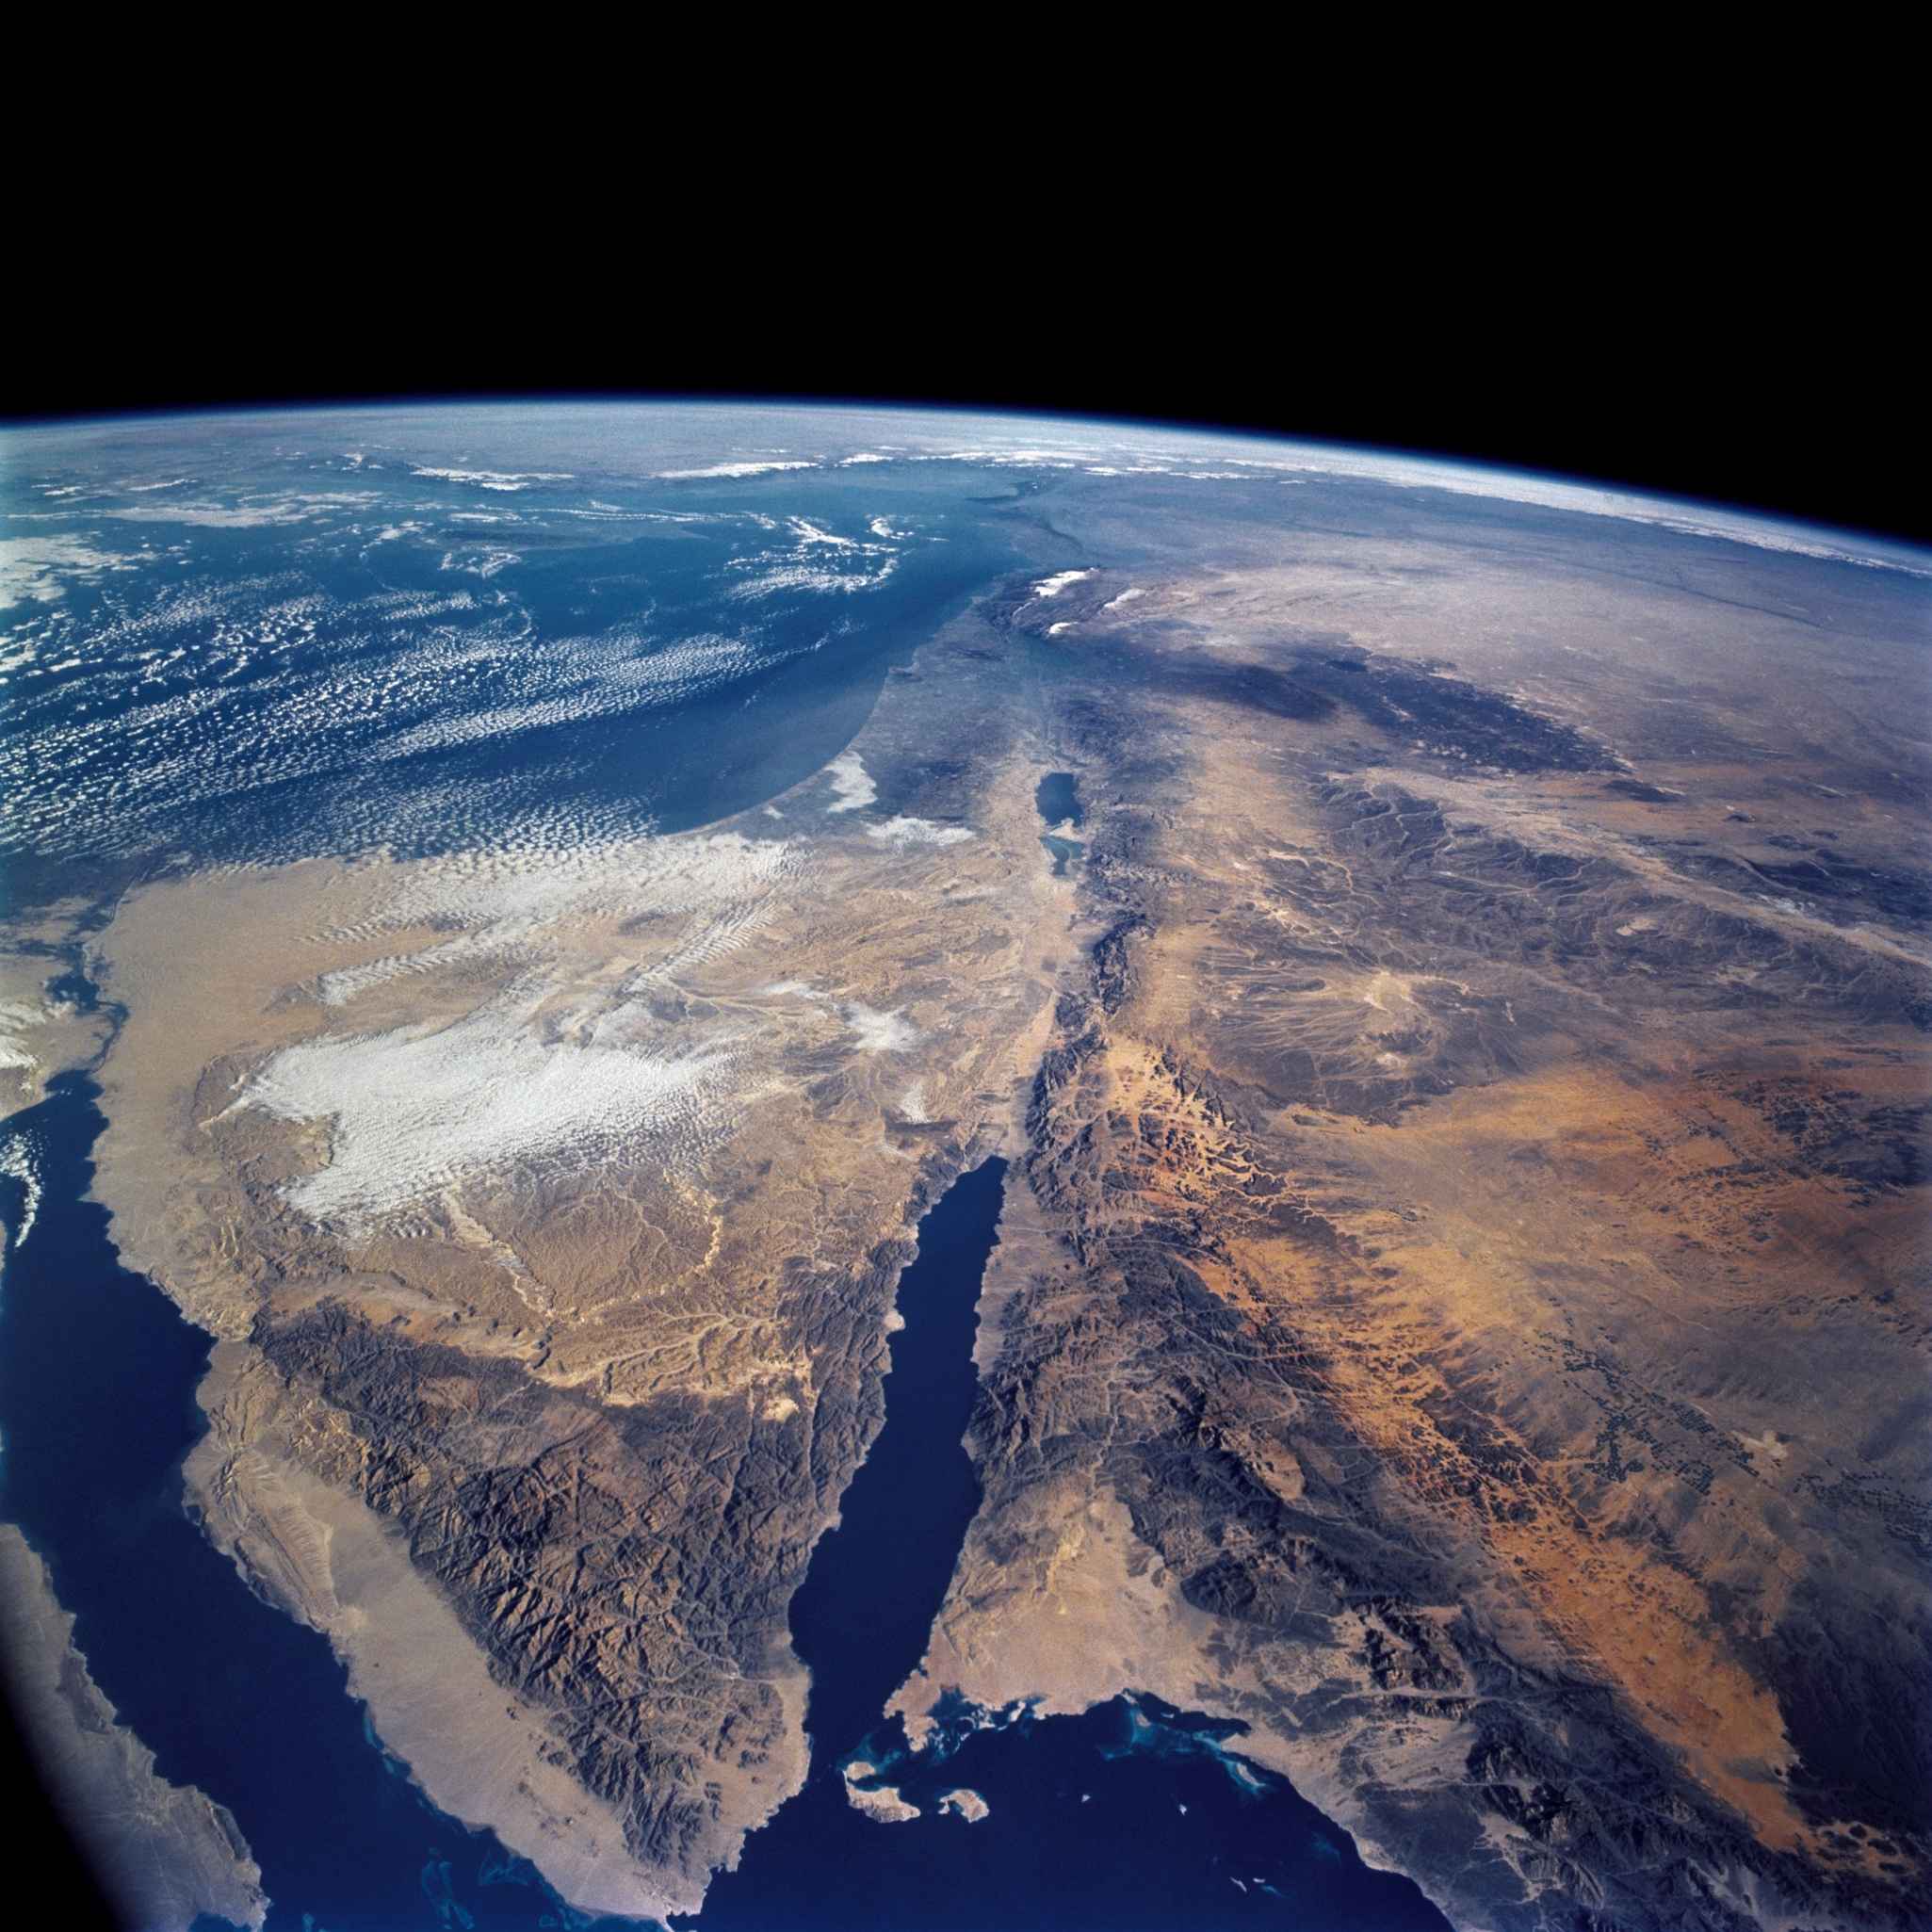 Sinai, Dead Sea, Space Shuttle, March, 2002, NASA, Earth athmosphere, satellite view